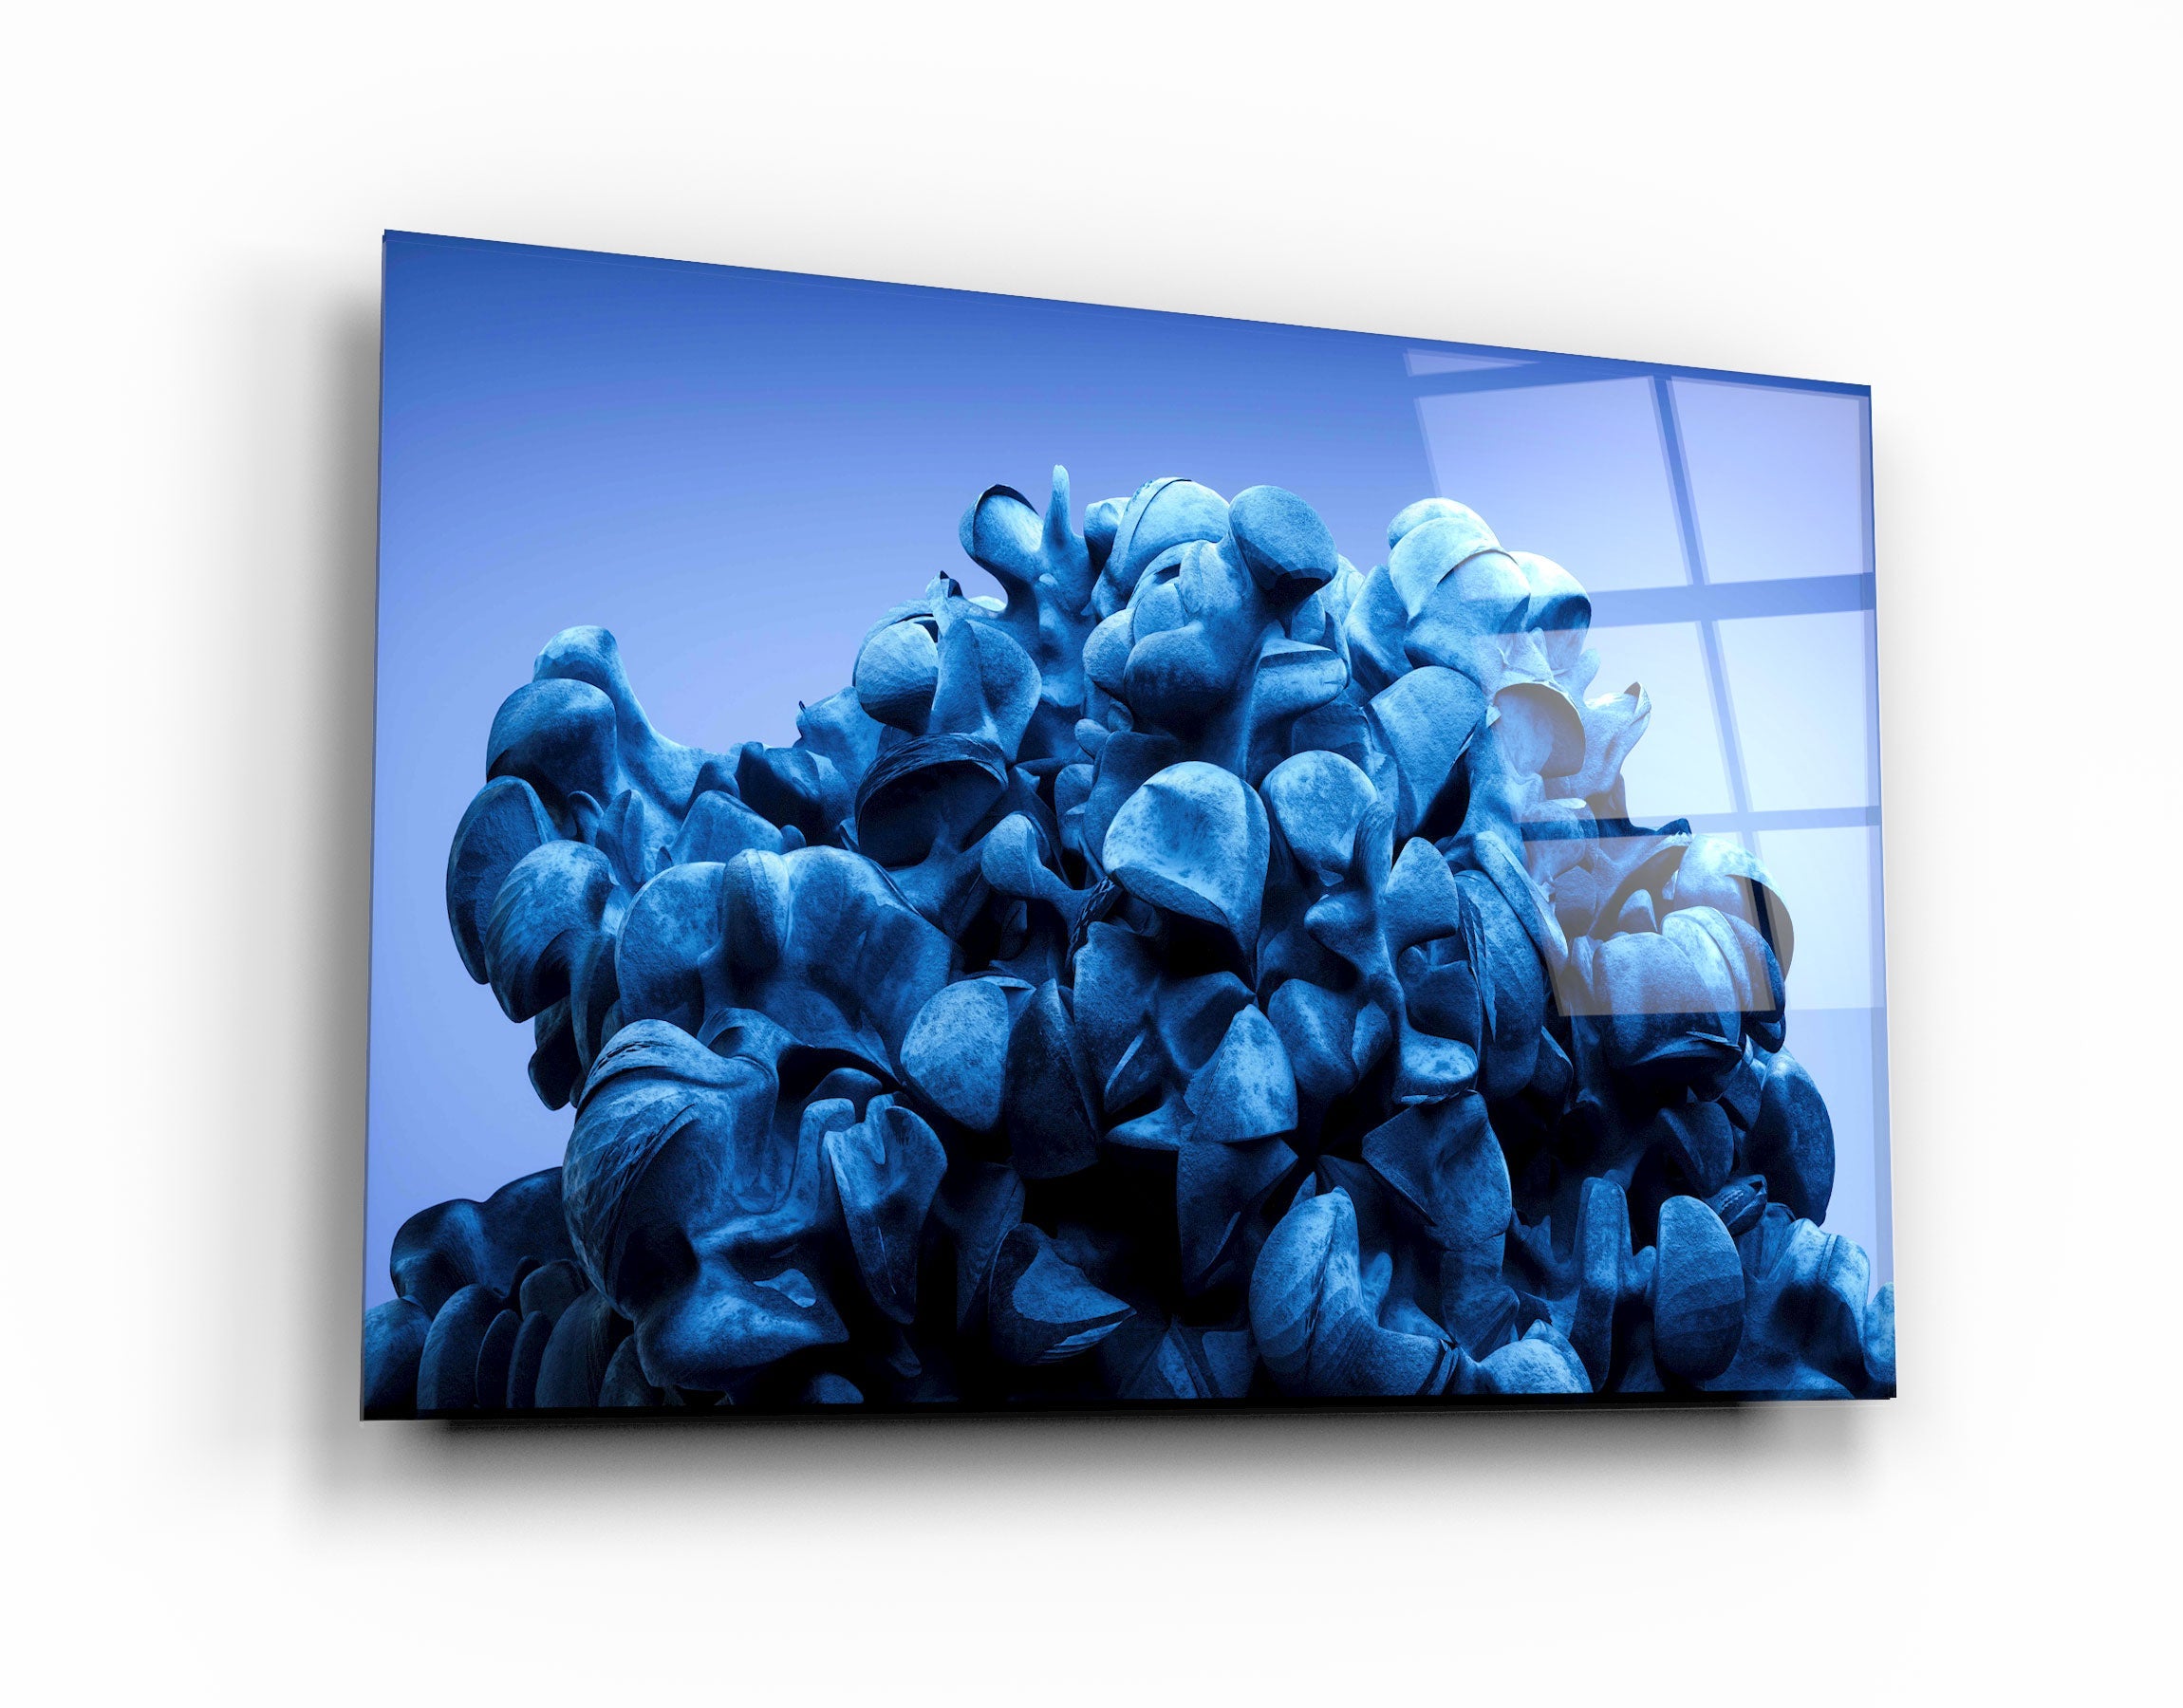 ・"Bluee"・Art mural en verre de la collection du designer